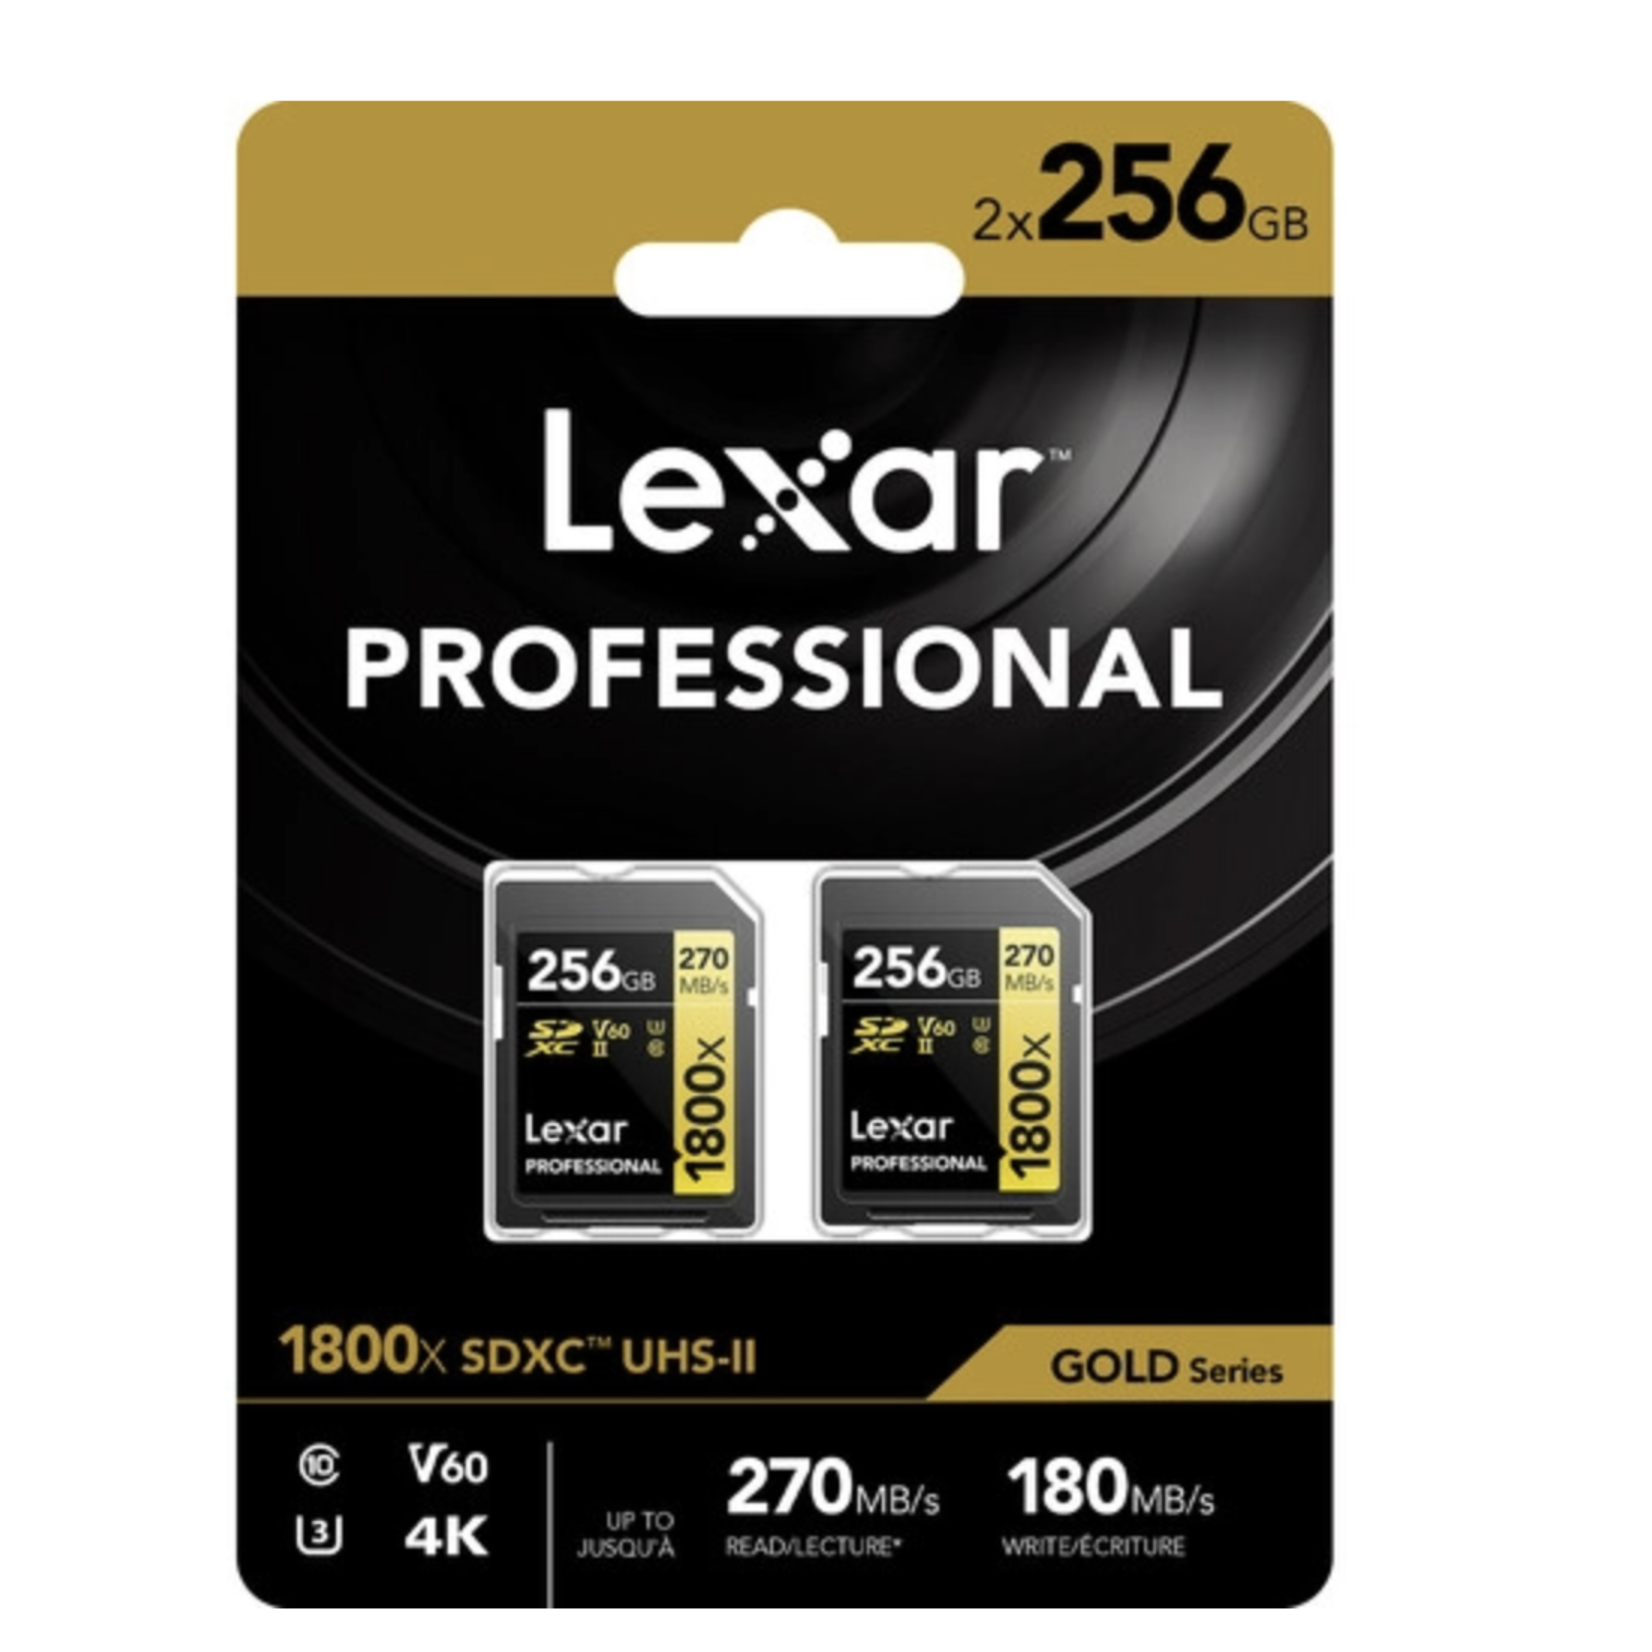 Lexar Lexar Professional 1800x UHS-II SDXC (GOLD Series) Choose Capacity